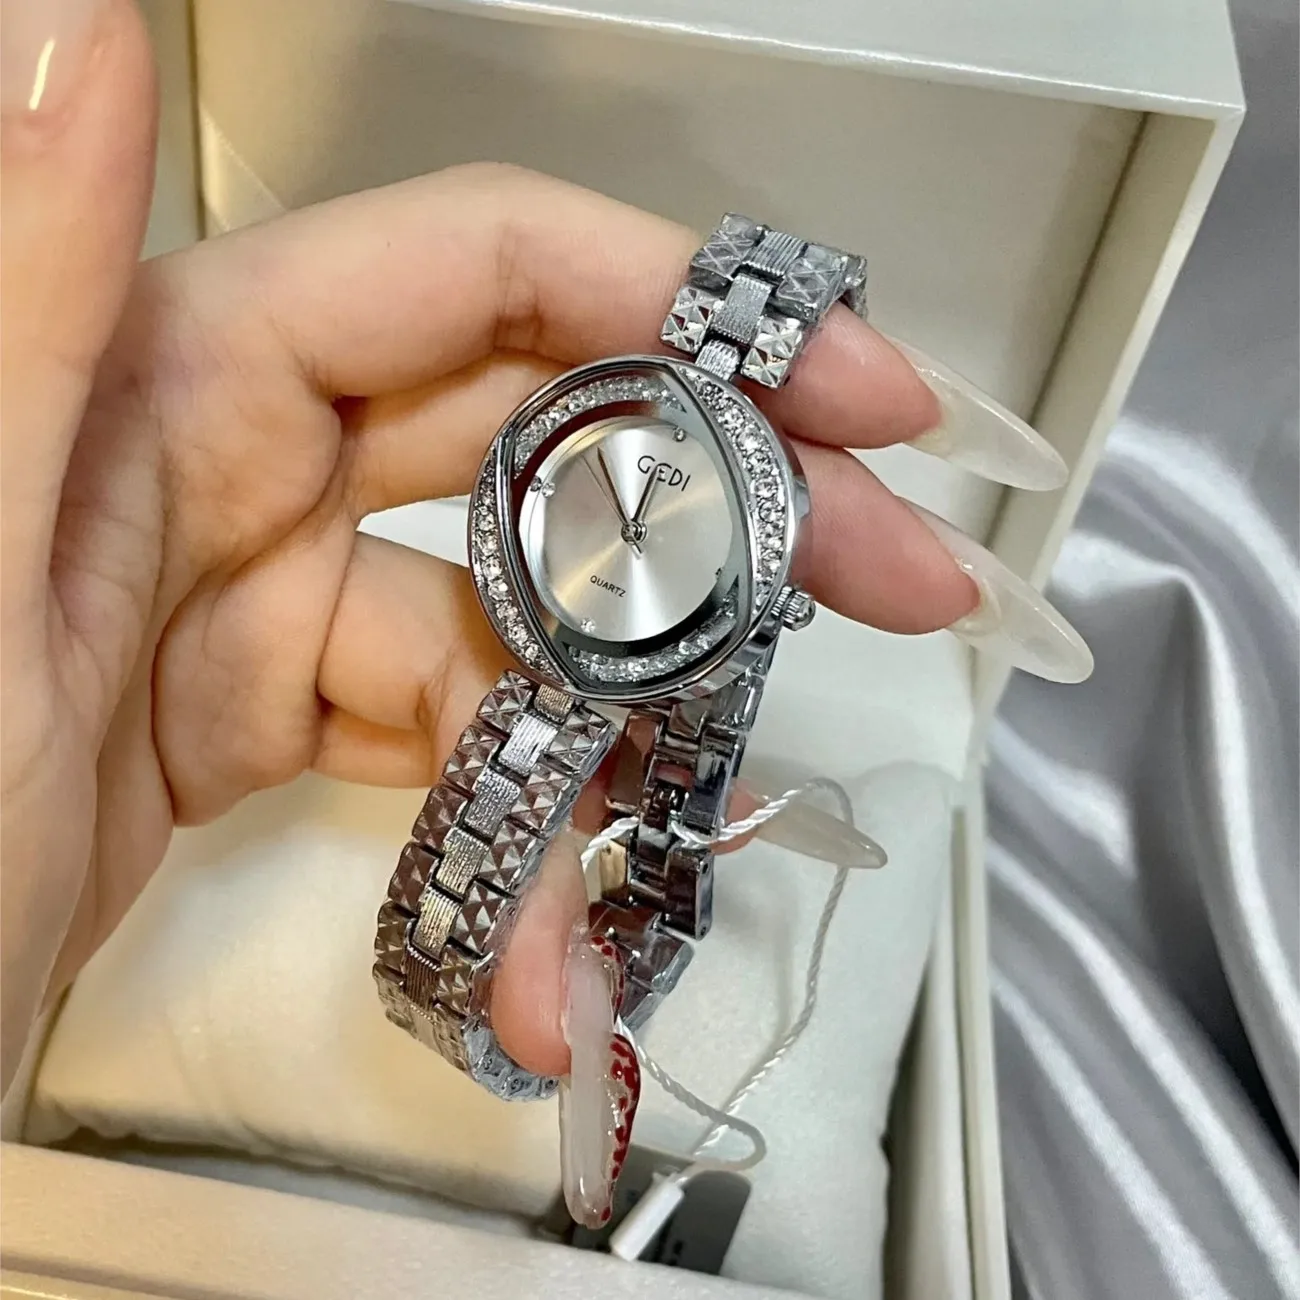 

Silver luxury steel band women's watch fashion temperament casual quartz watch full of diamonds delicate women's watch gift